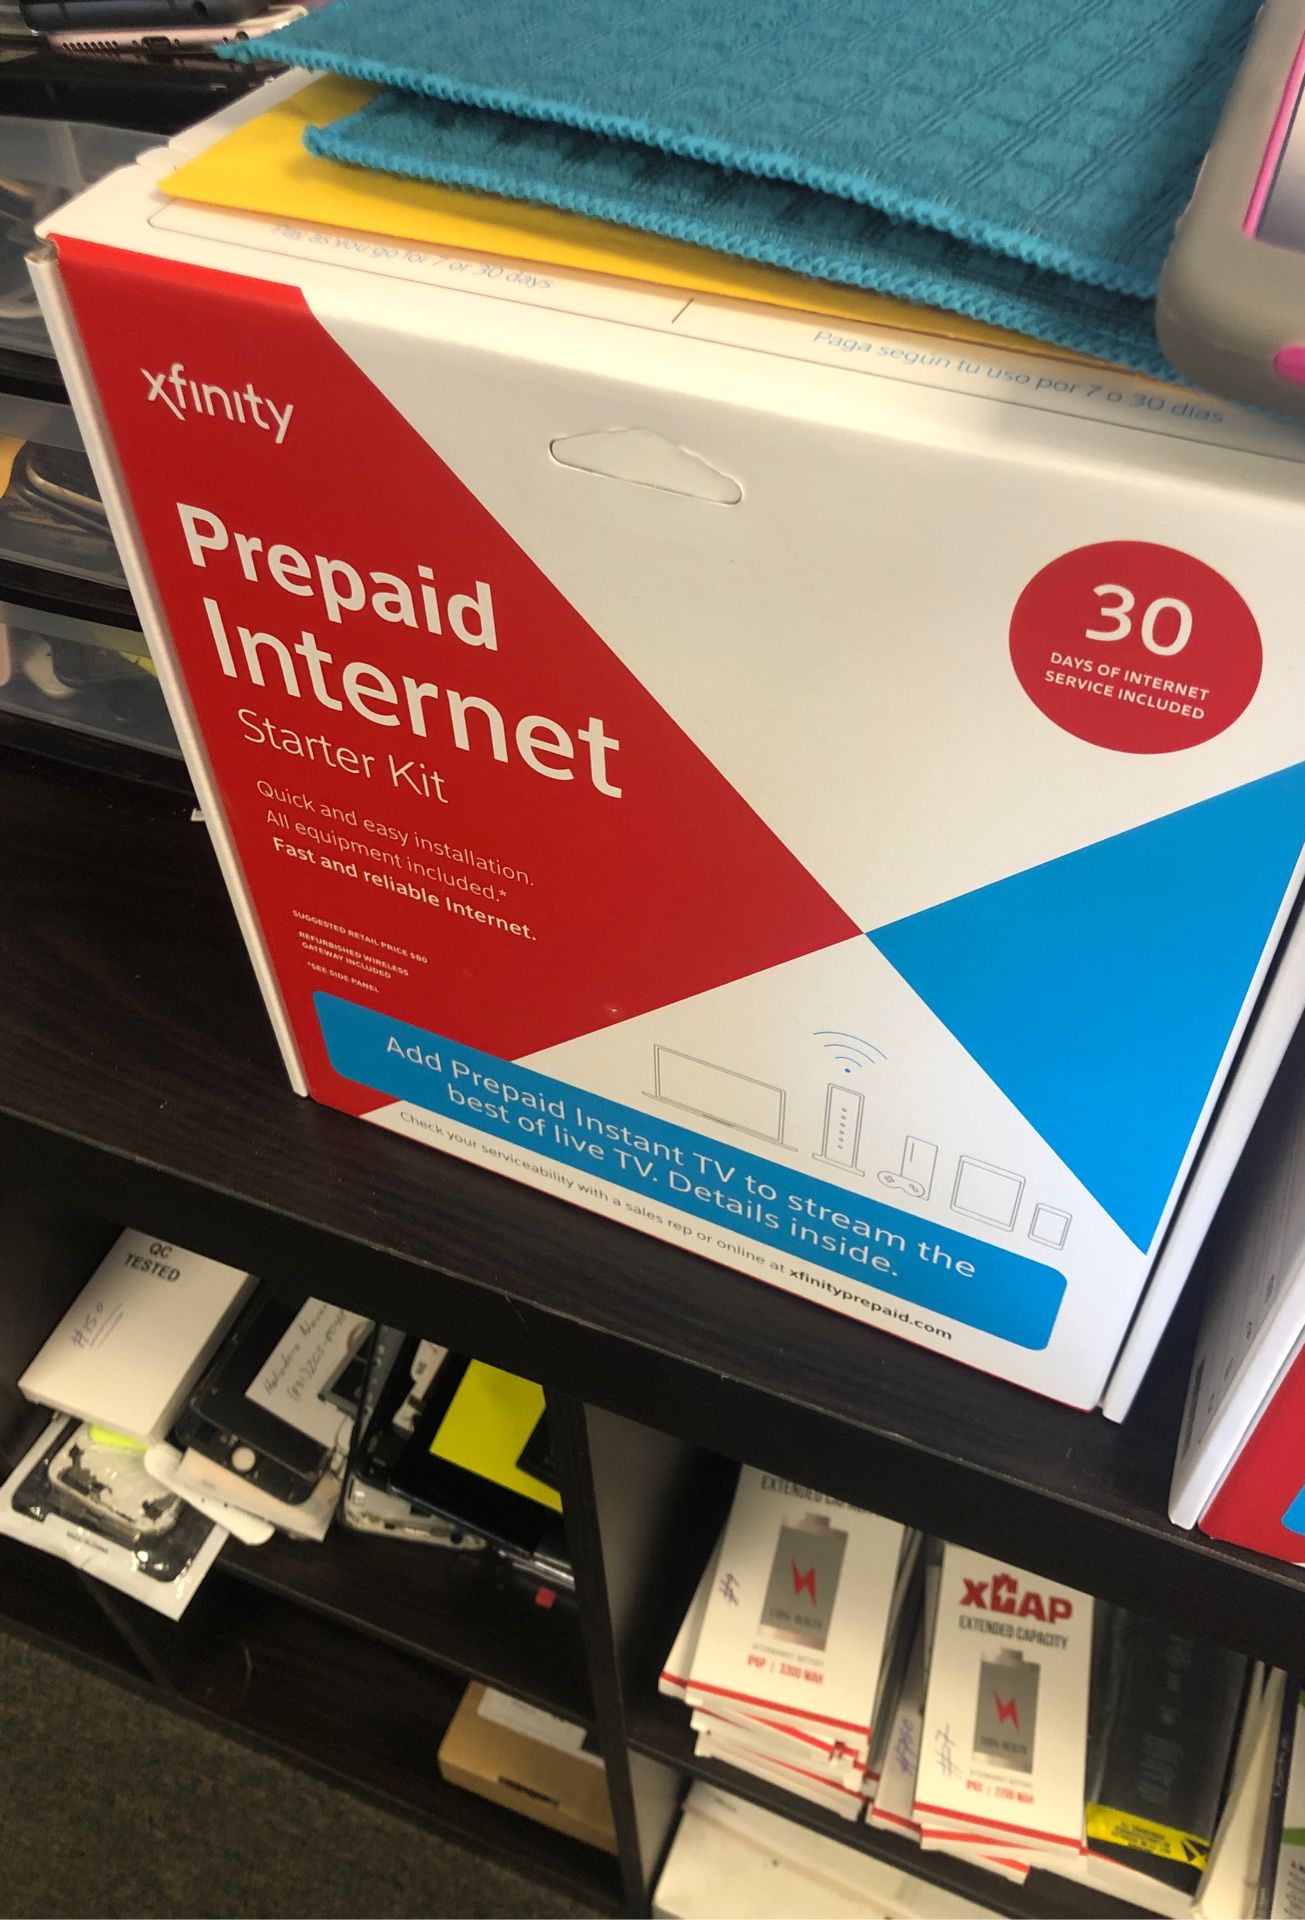 Prepaid internet, no hidden fees or contract